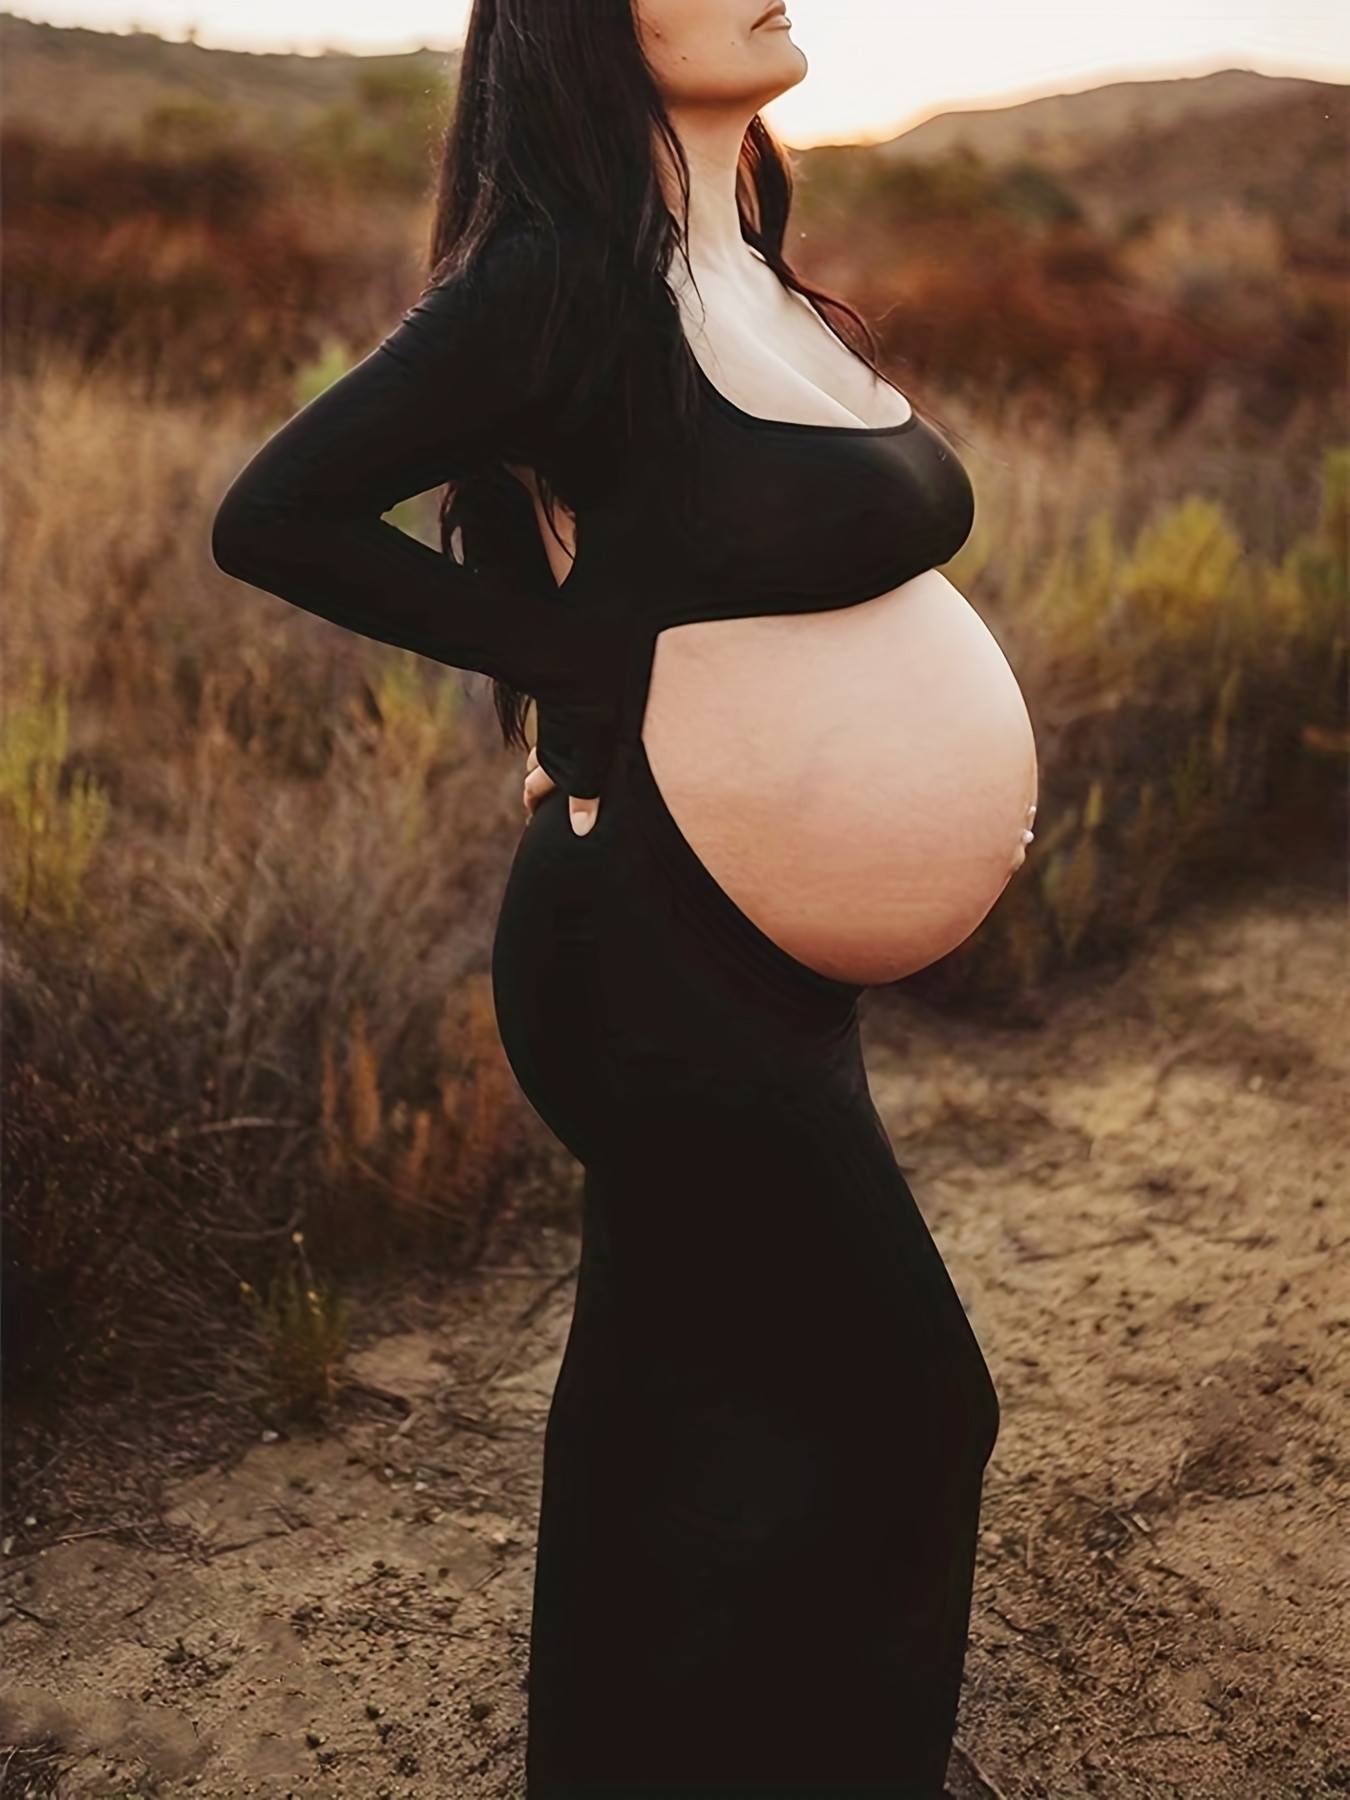 Tejiojio Maternity/Labor/Nursing Clothing Clearance Pregnant Women